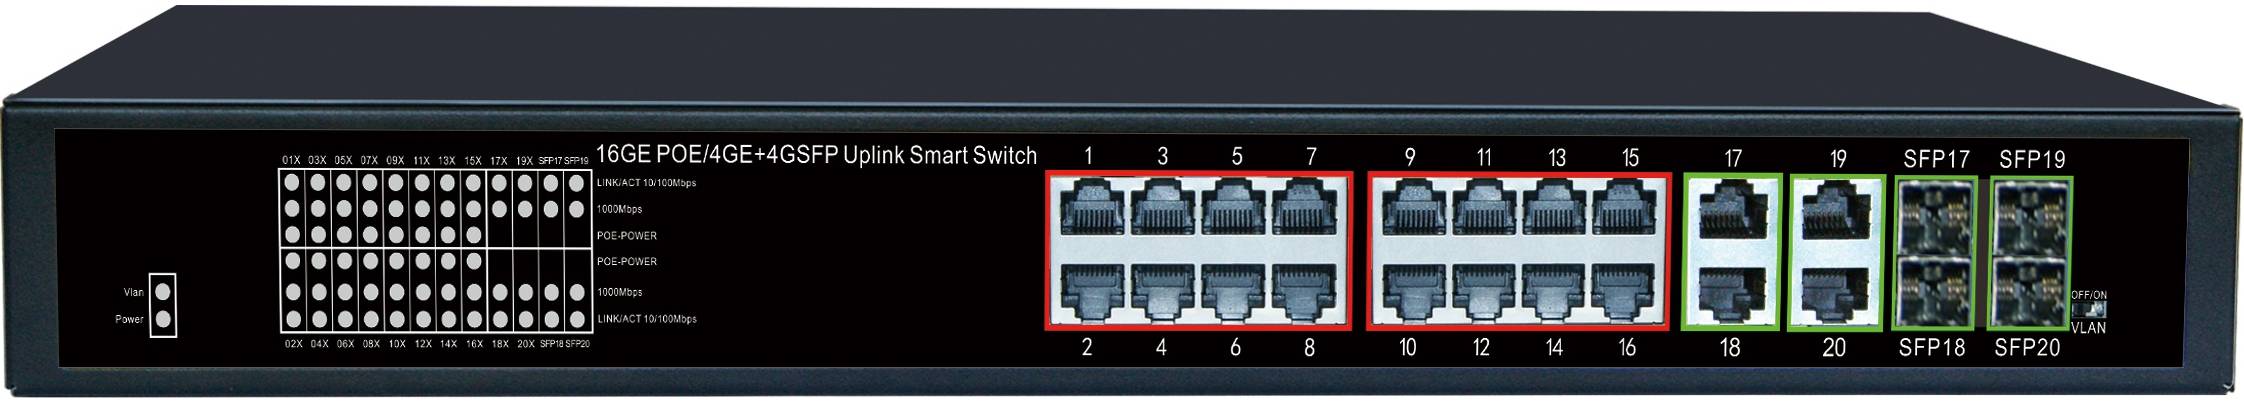 Wholesale China Gigabit Network Switch Manufacturers Pricelist - 1U Type 16 Ports 10/100/1000M PoE Port+4 Uplink Gigabit Ethernet Port+4 Gigabit SFP Fiber Port, Smart PoE Switch JHA-P444016BH R...